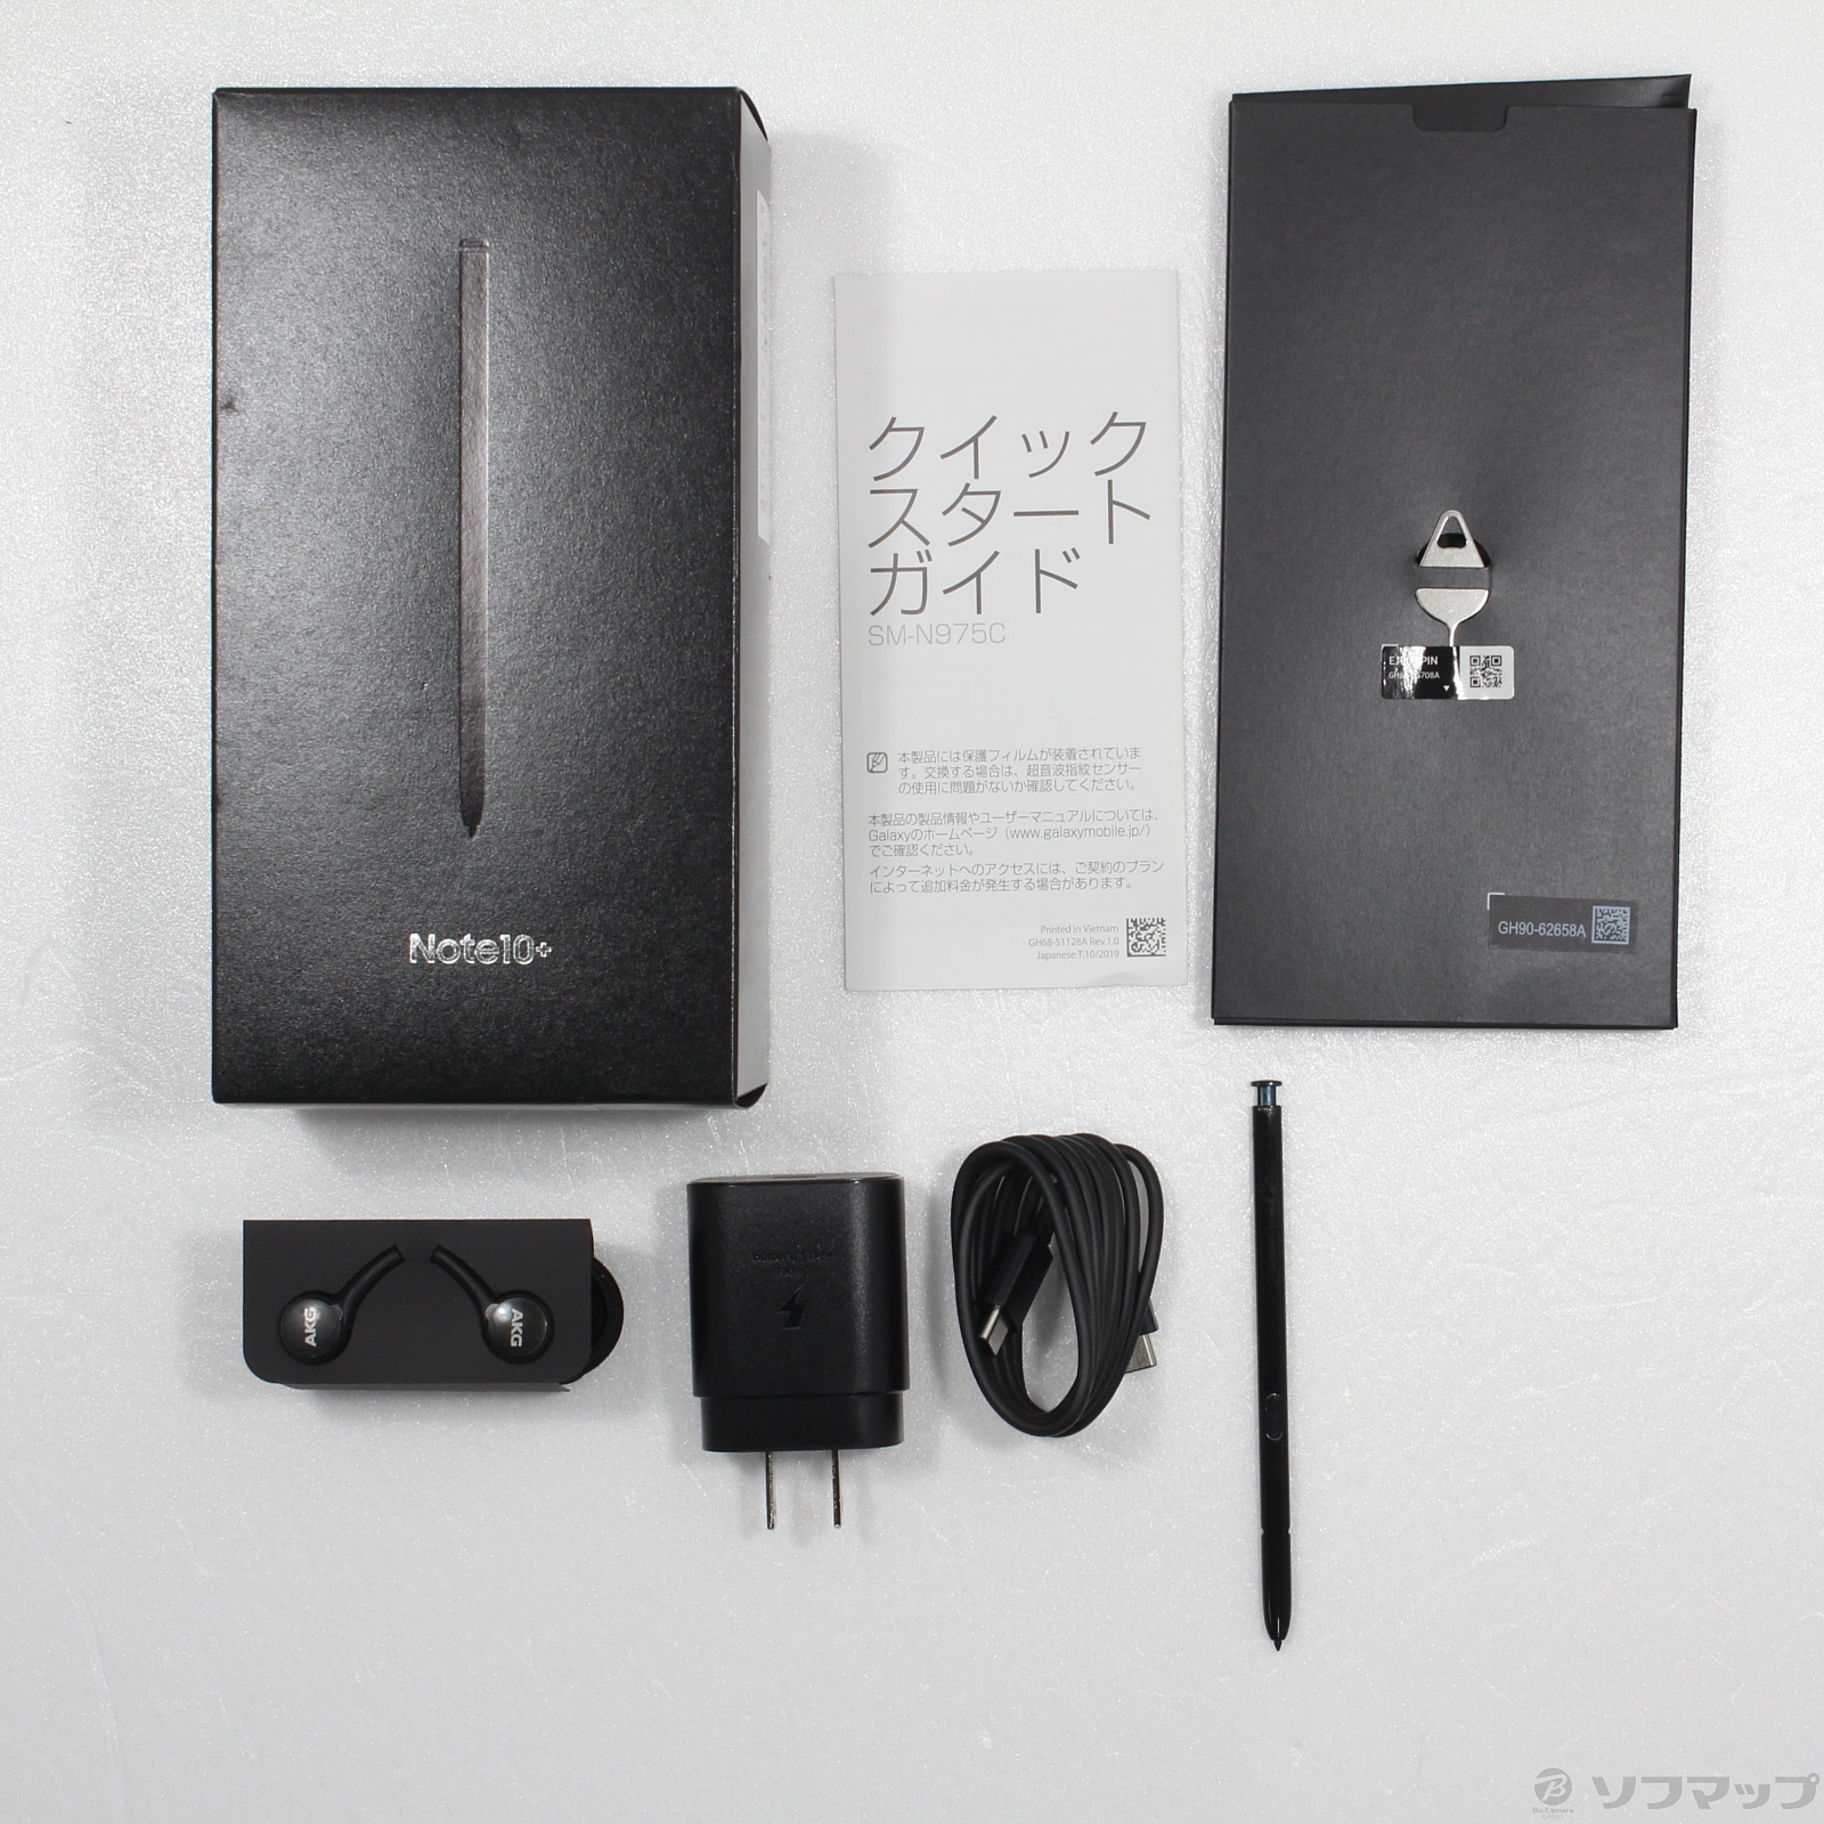 SAMSUNG Galaxy Note10+ オーラブラック SM-N975Cブラック情報端末 